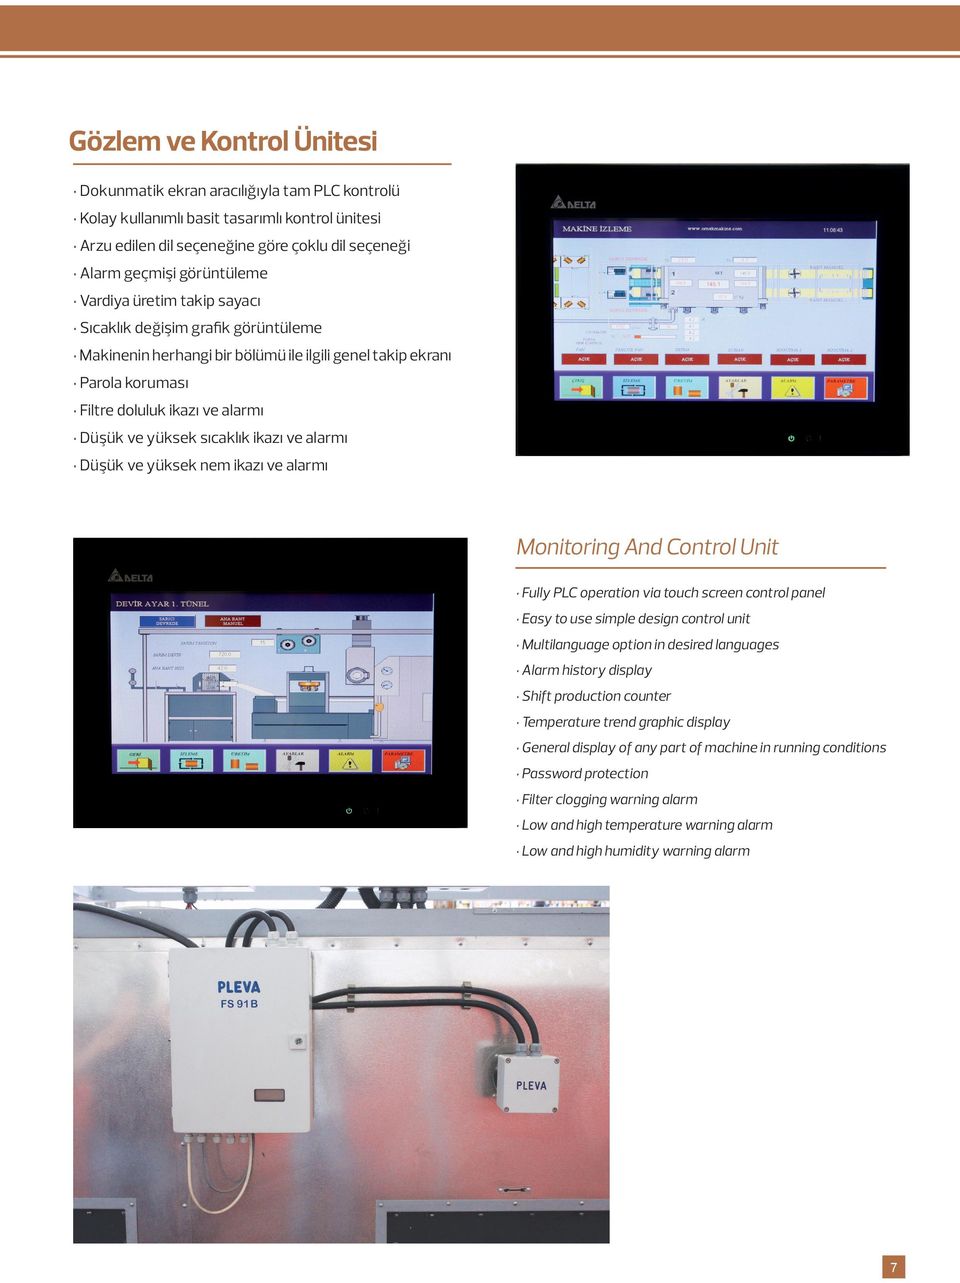 ikazı ve alarmı Düşük ve yüksek nem ikazı ve alarmı Monitoring And Control Unit Fully PLC operation via touch screen control panel Easy to use simple design control unit Multilanguage option in